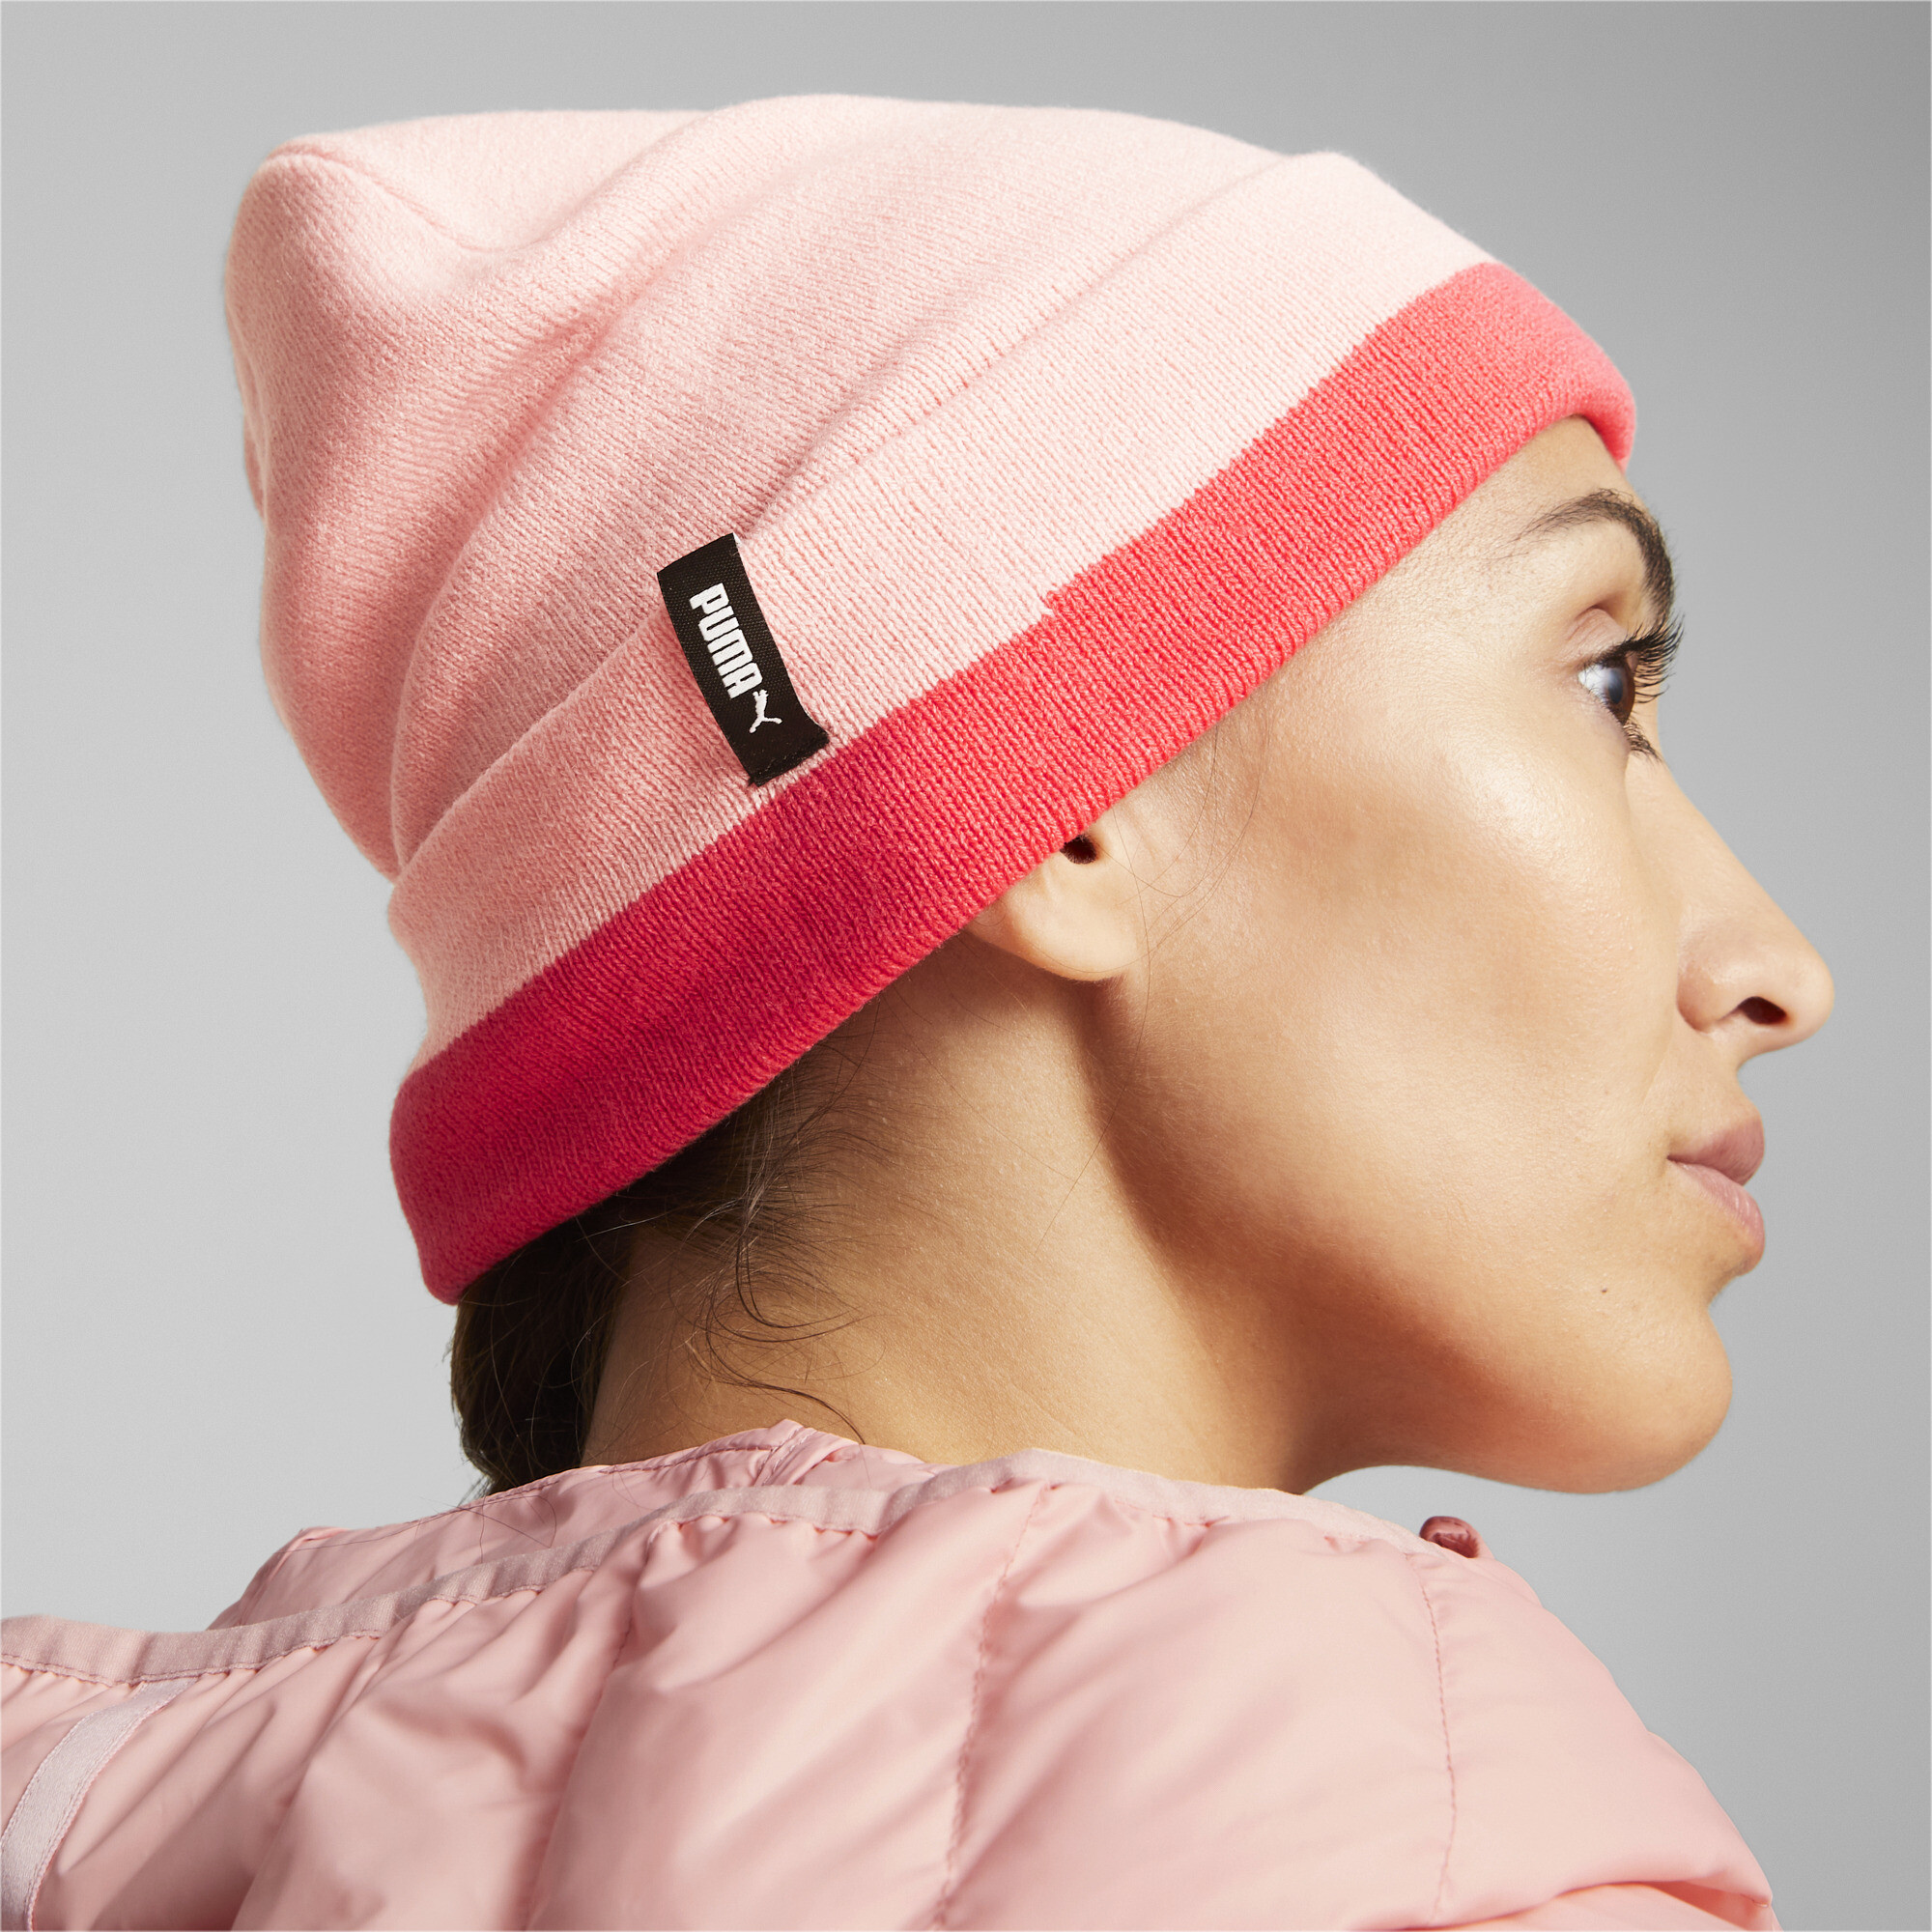 Puma Script Logo Beanie Hat, Pink, Size Adult, Accessories